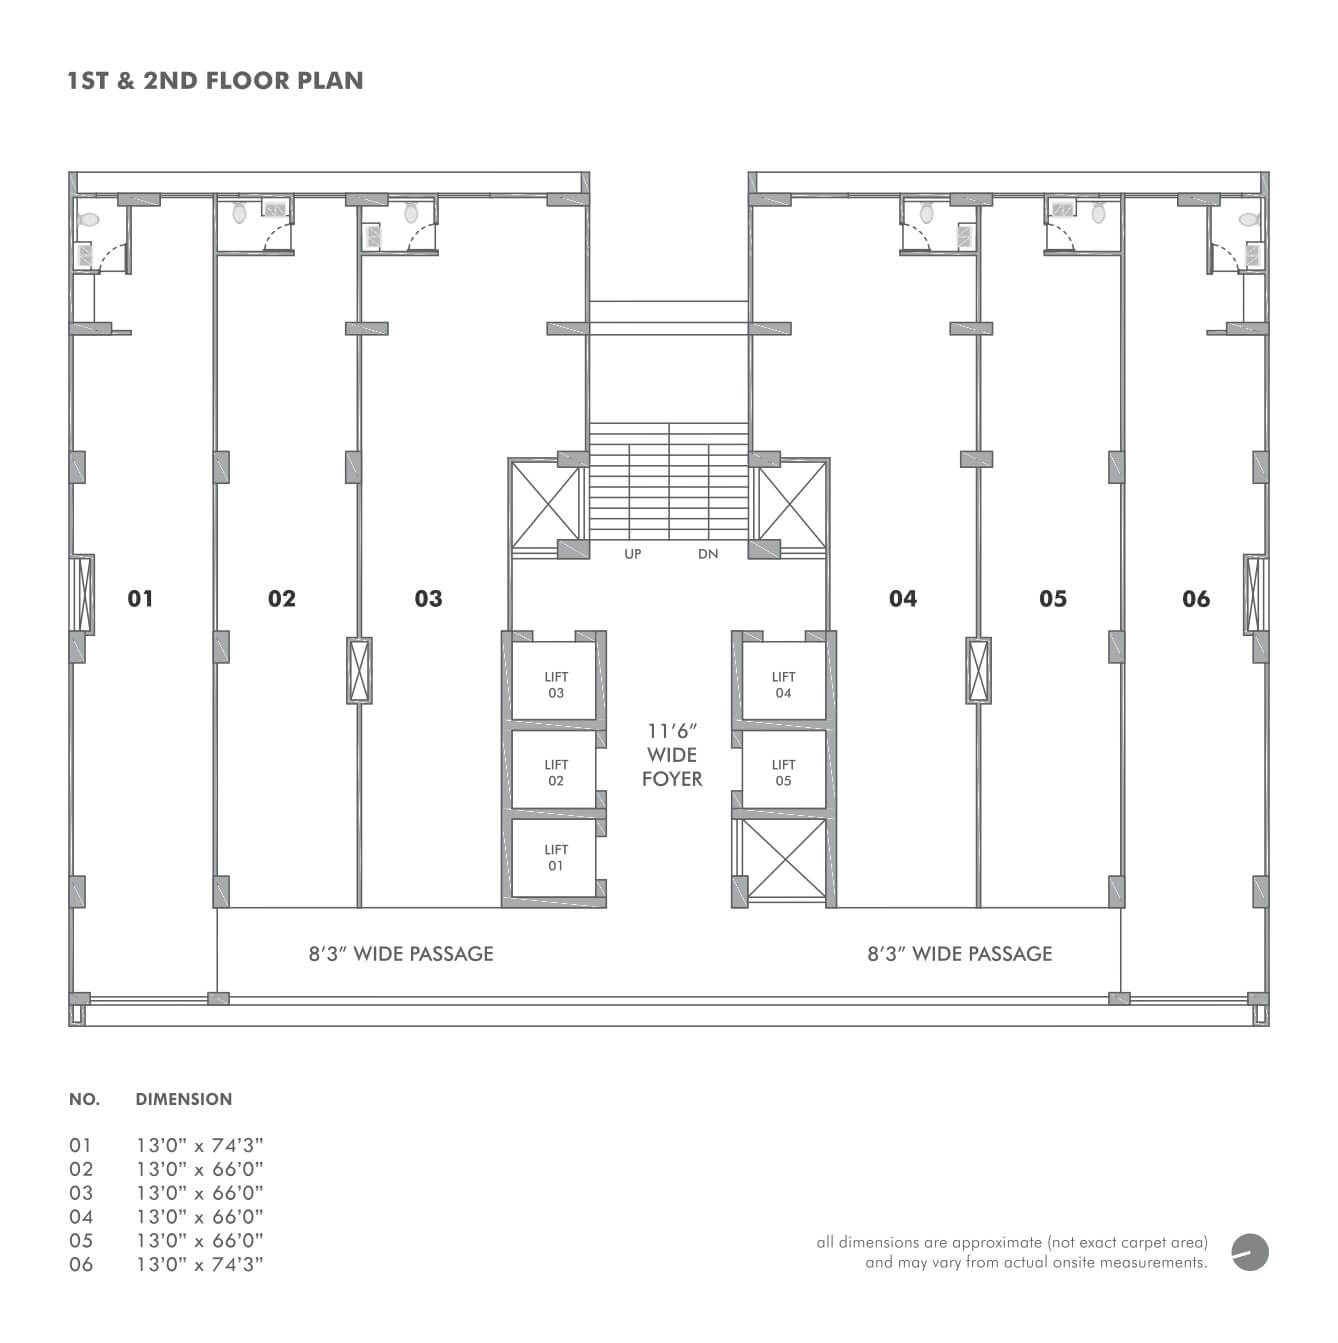 Layout Plan 1st & 2nd Floor of Sun Central Park at Ambli